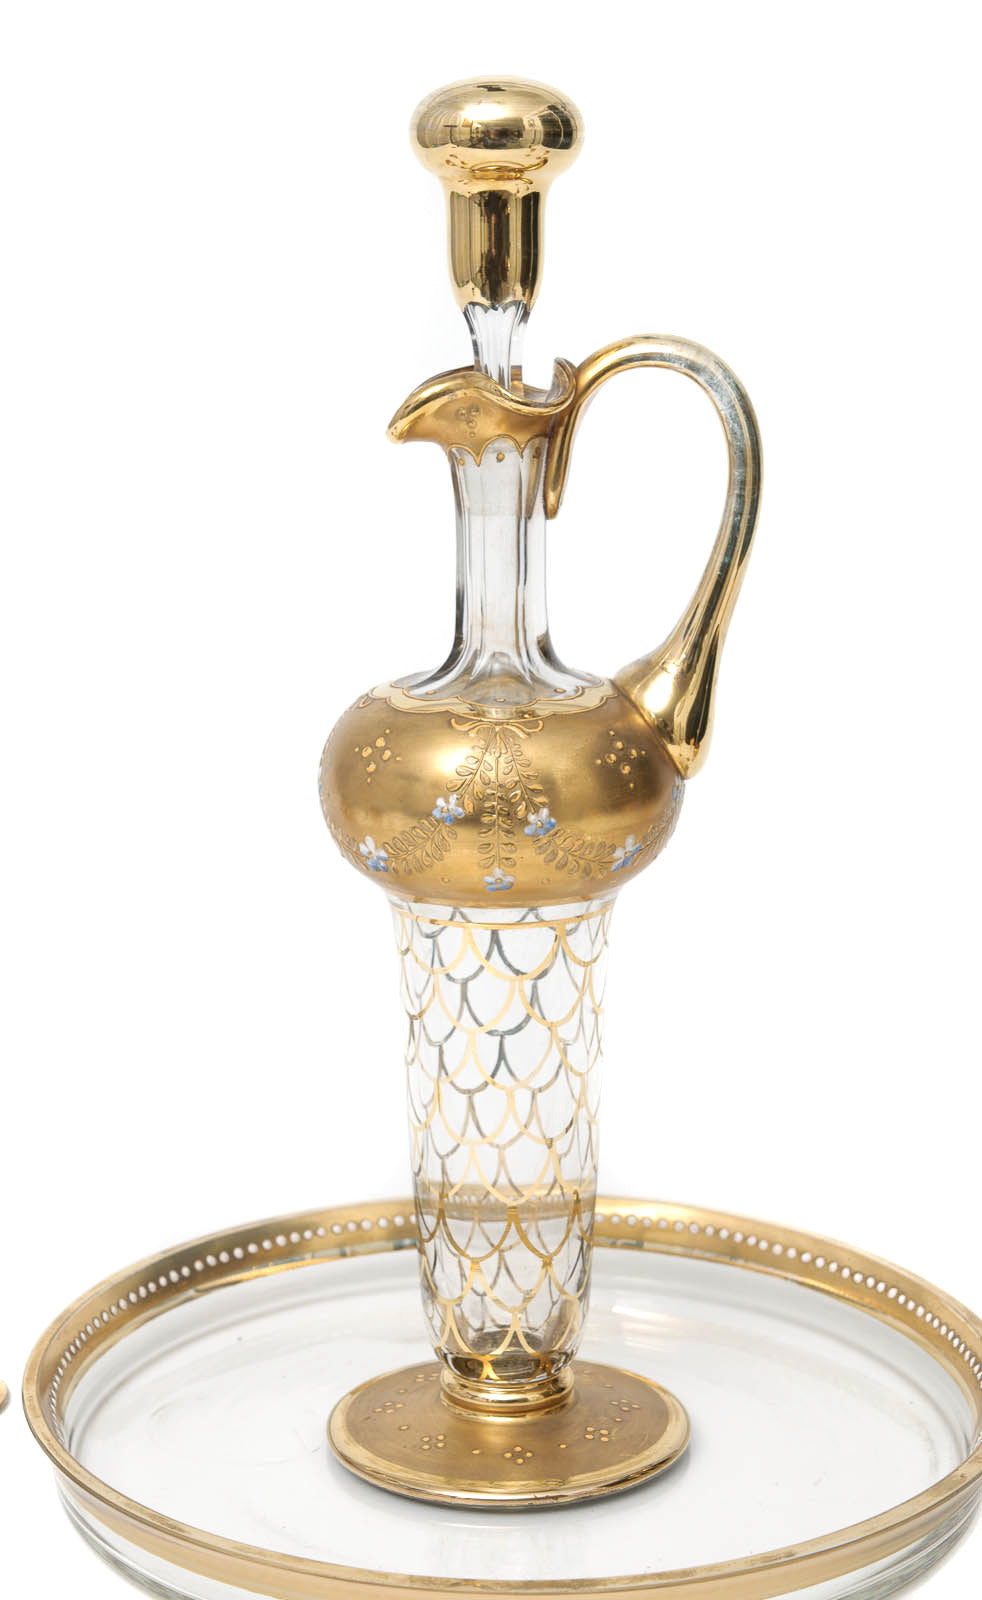 A Grand Antique Bohemian Liqueur Glass Set with Decanter, Glasses & Tray c1900 (Code 9129)